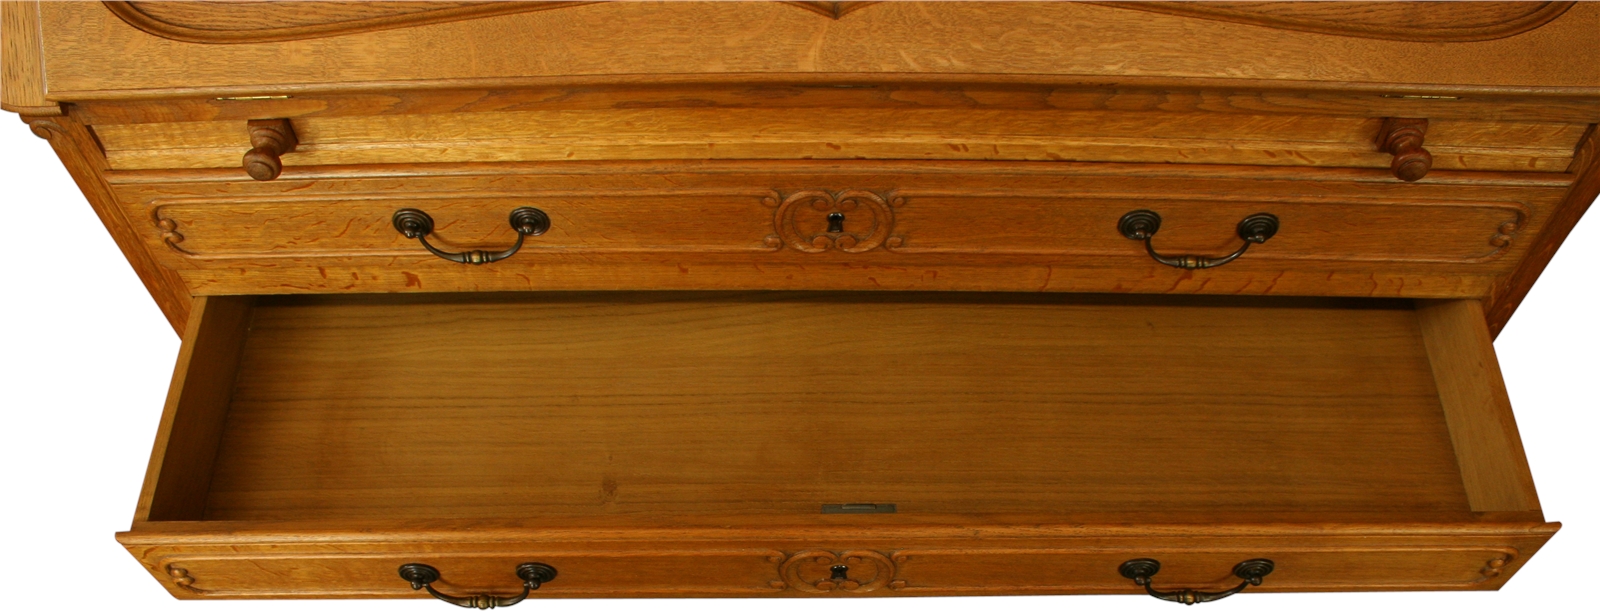 Vintage French Secretary Desk, Quartersawn Golden Oak, Carved, Louis XV Style-Image 14